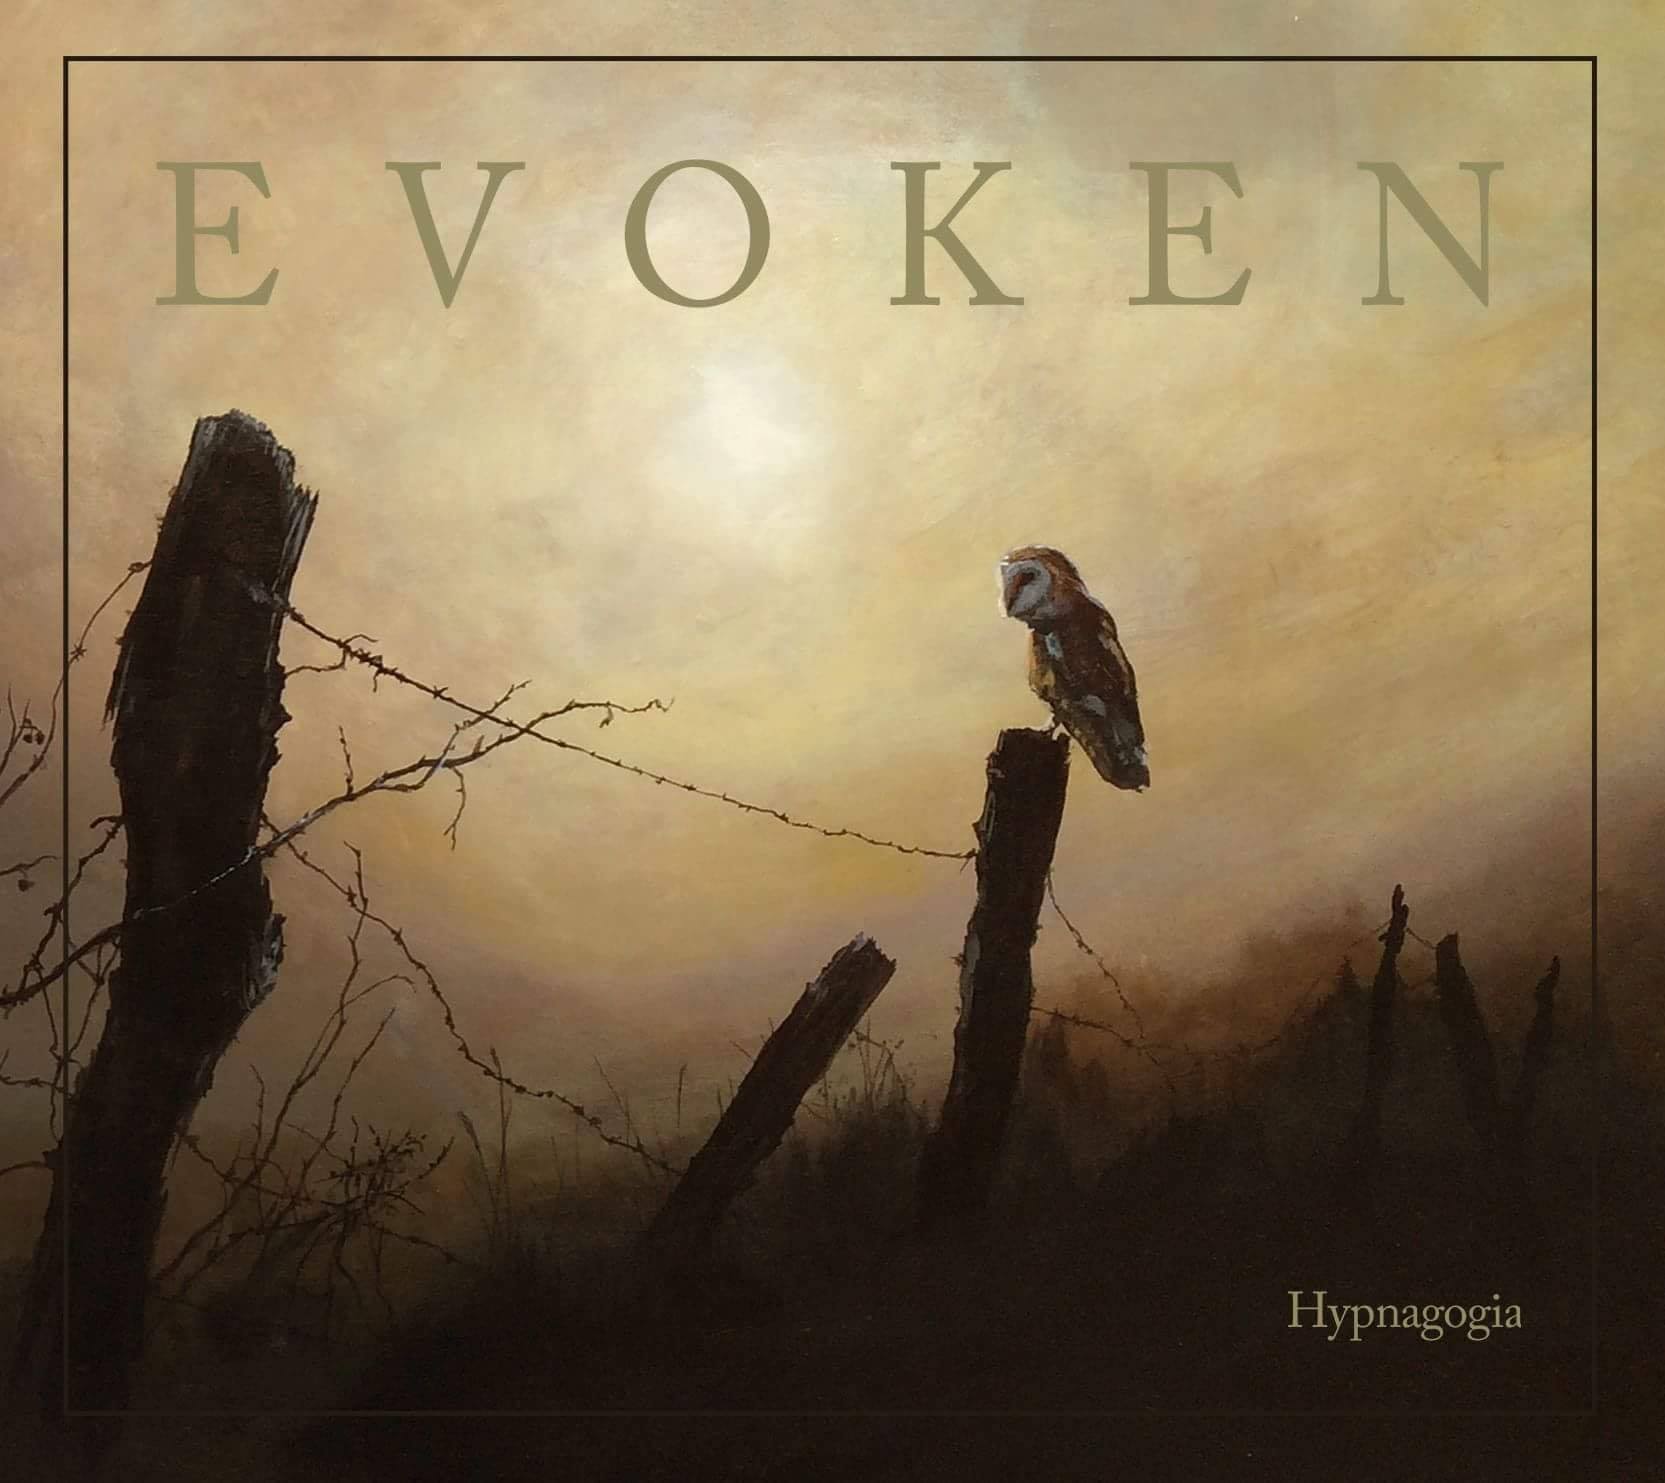 Evoken to release ‘Hypnagogia’ in November